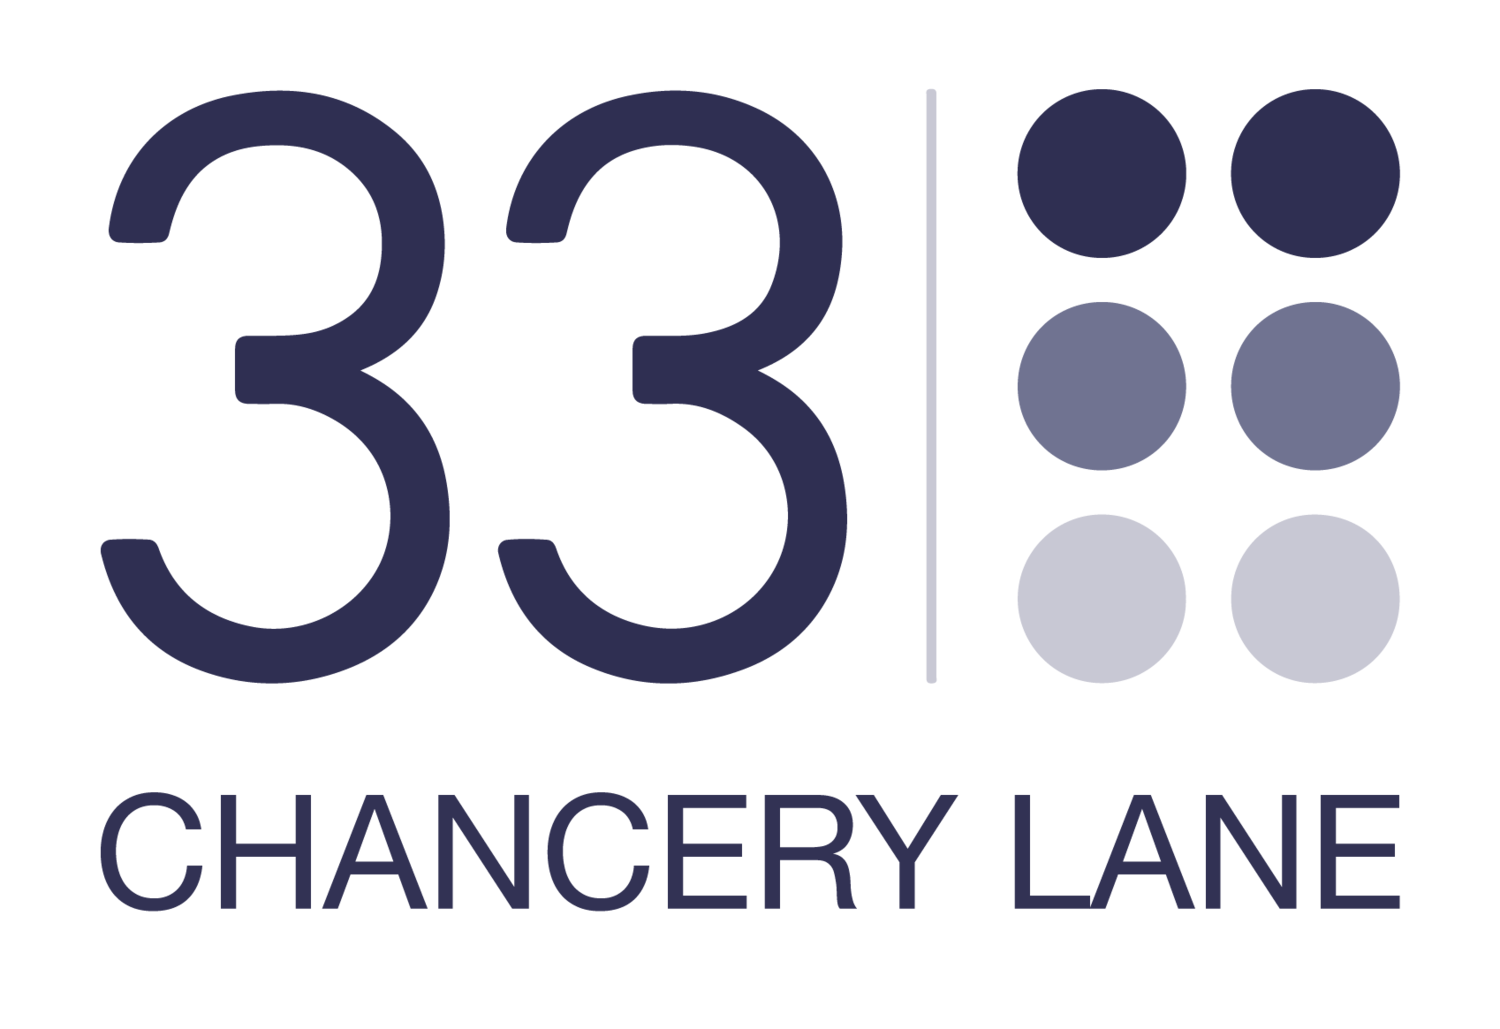 33 Chancery lane